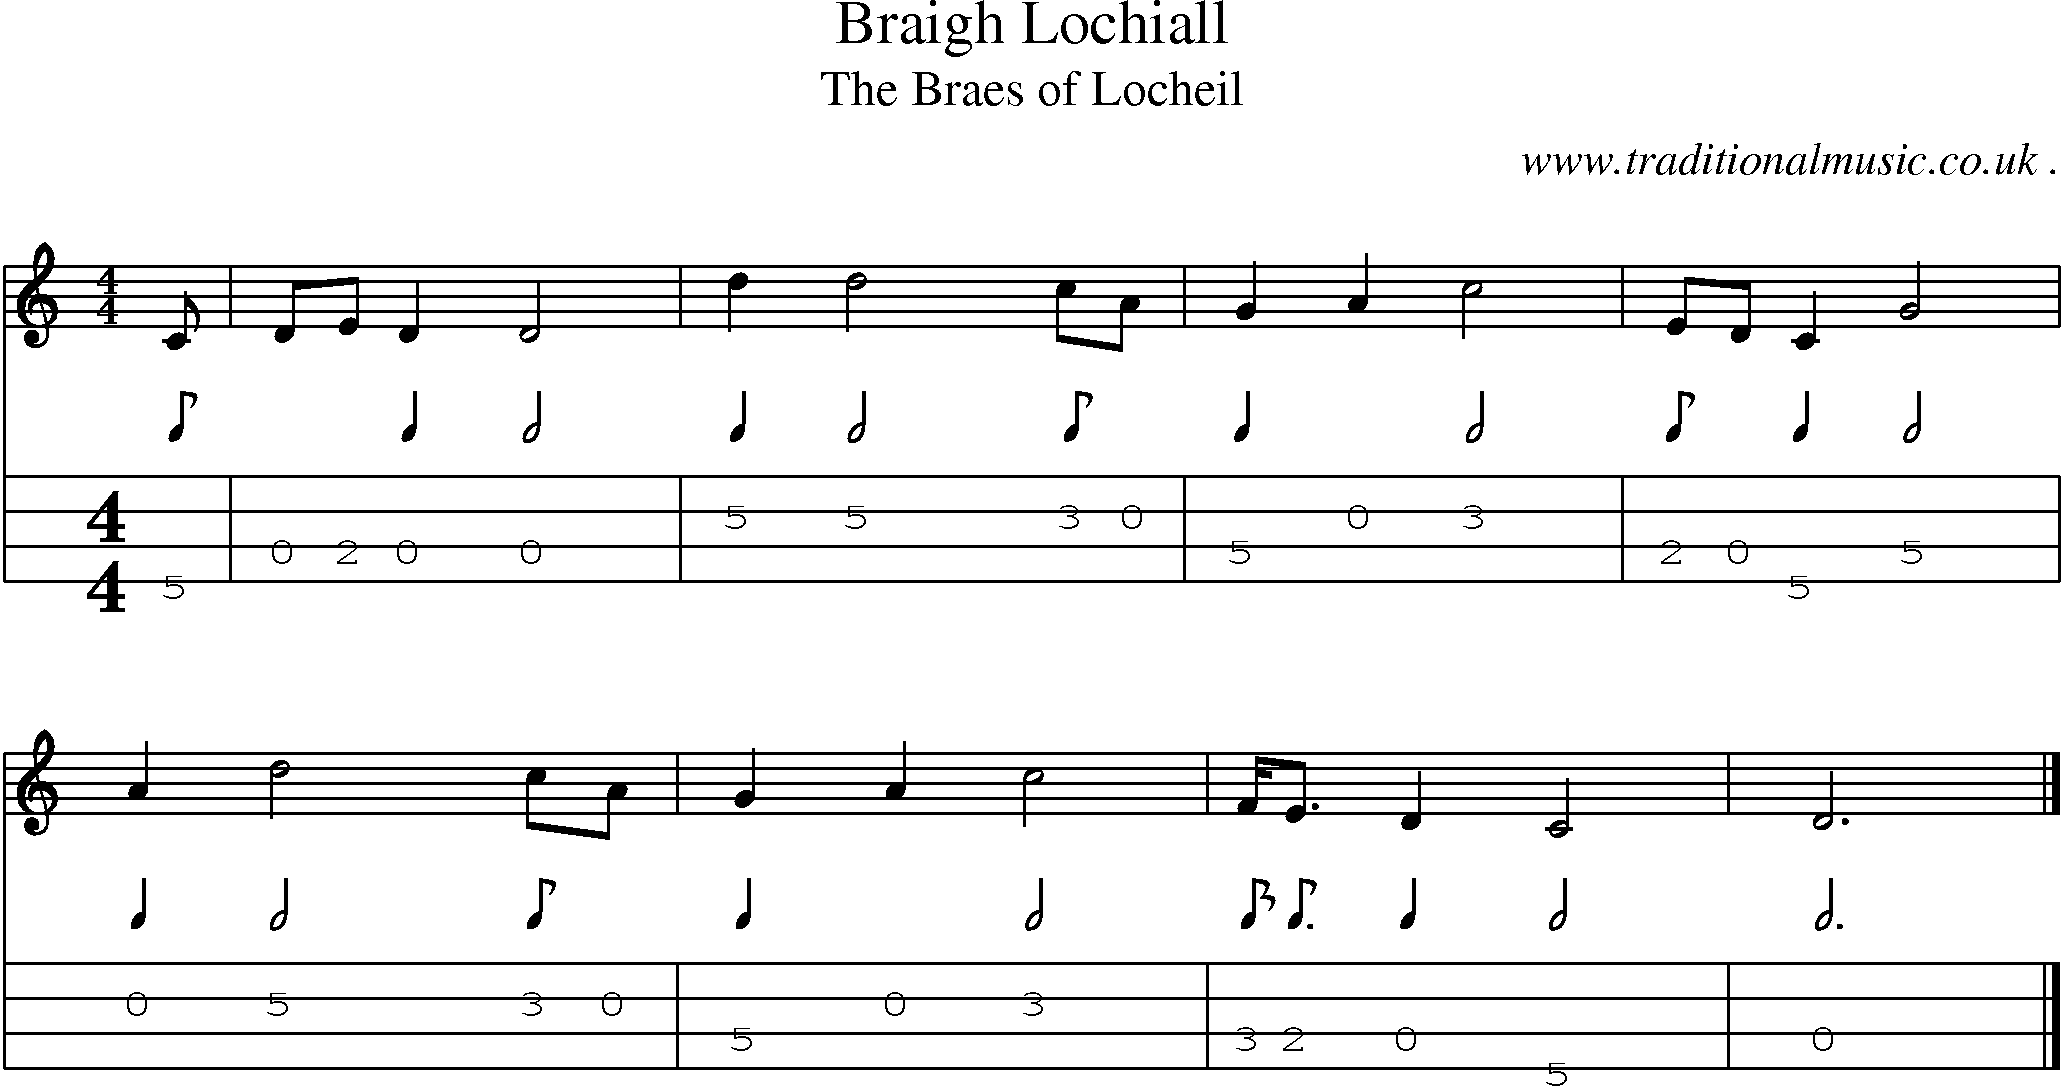 Sheet-music  score, Chords and Mandolin Tabs for Braigh Lochiall